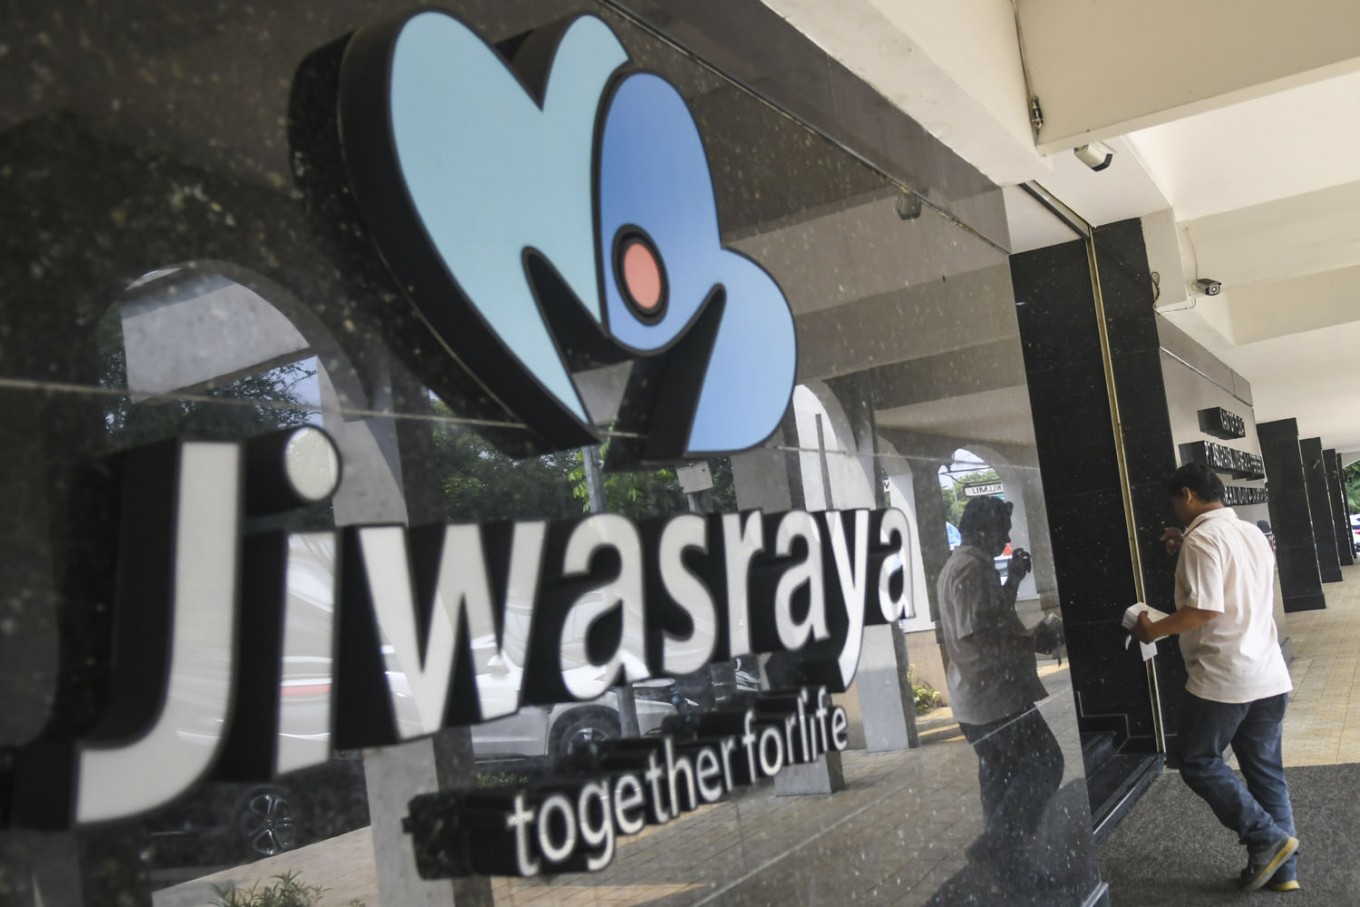 Jiwasraya scandal sends ripples through financial industry Business